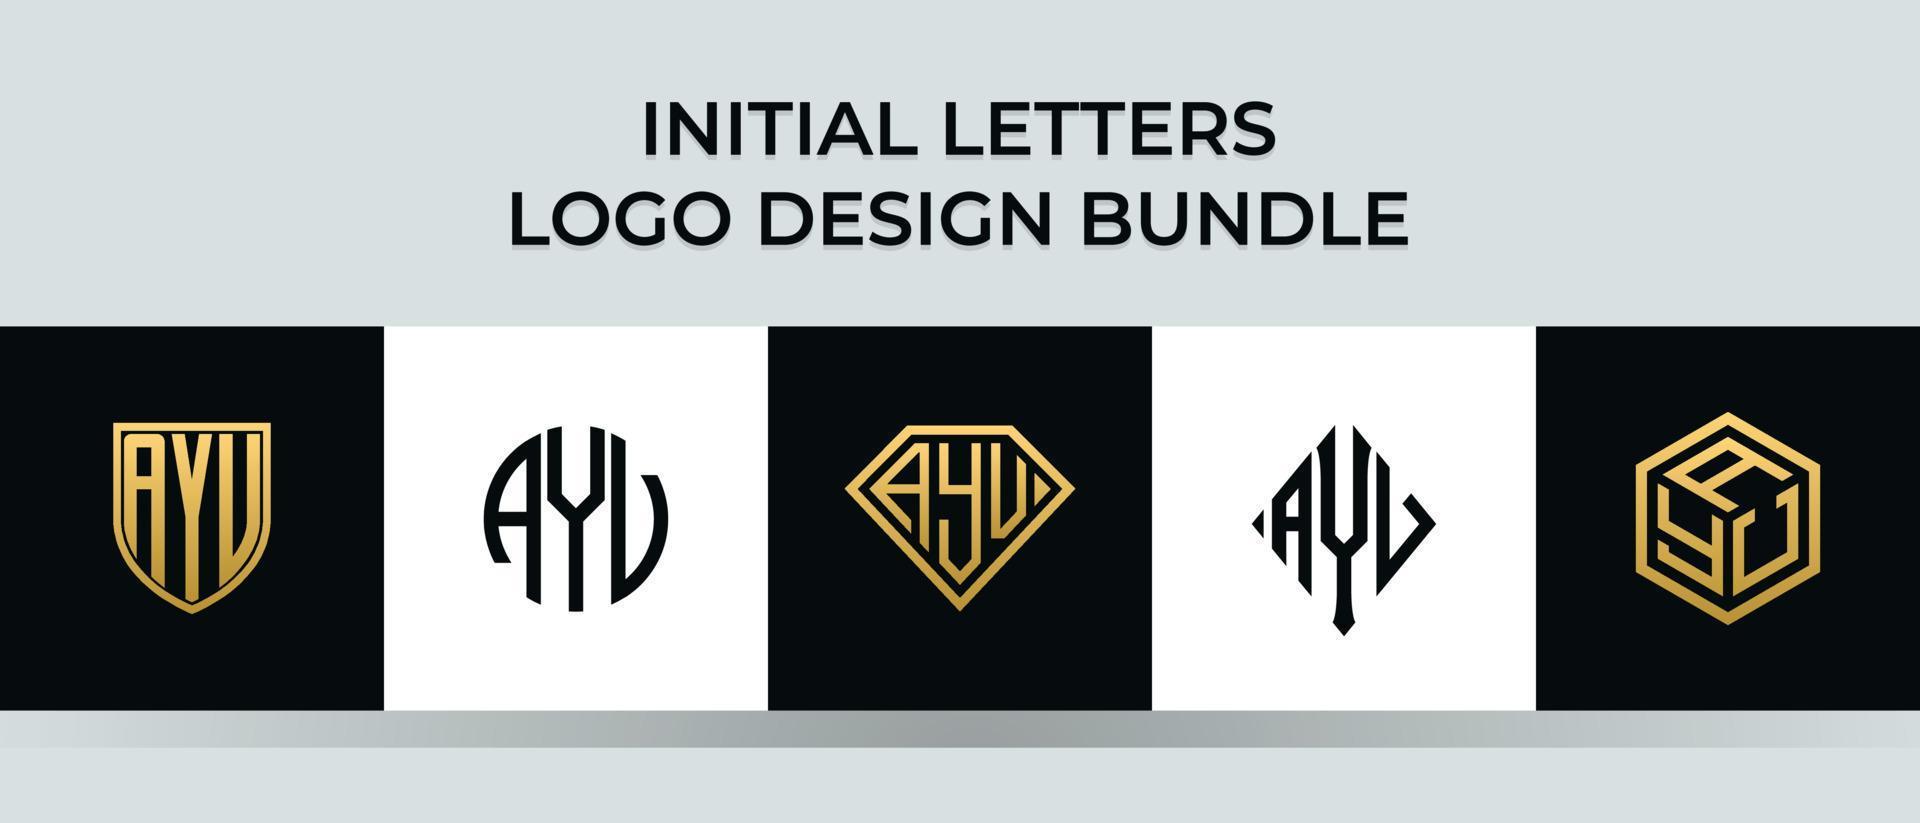 lettere iniziali ayv logo design bundle vettore